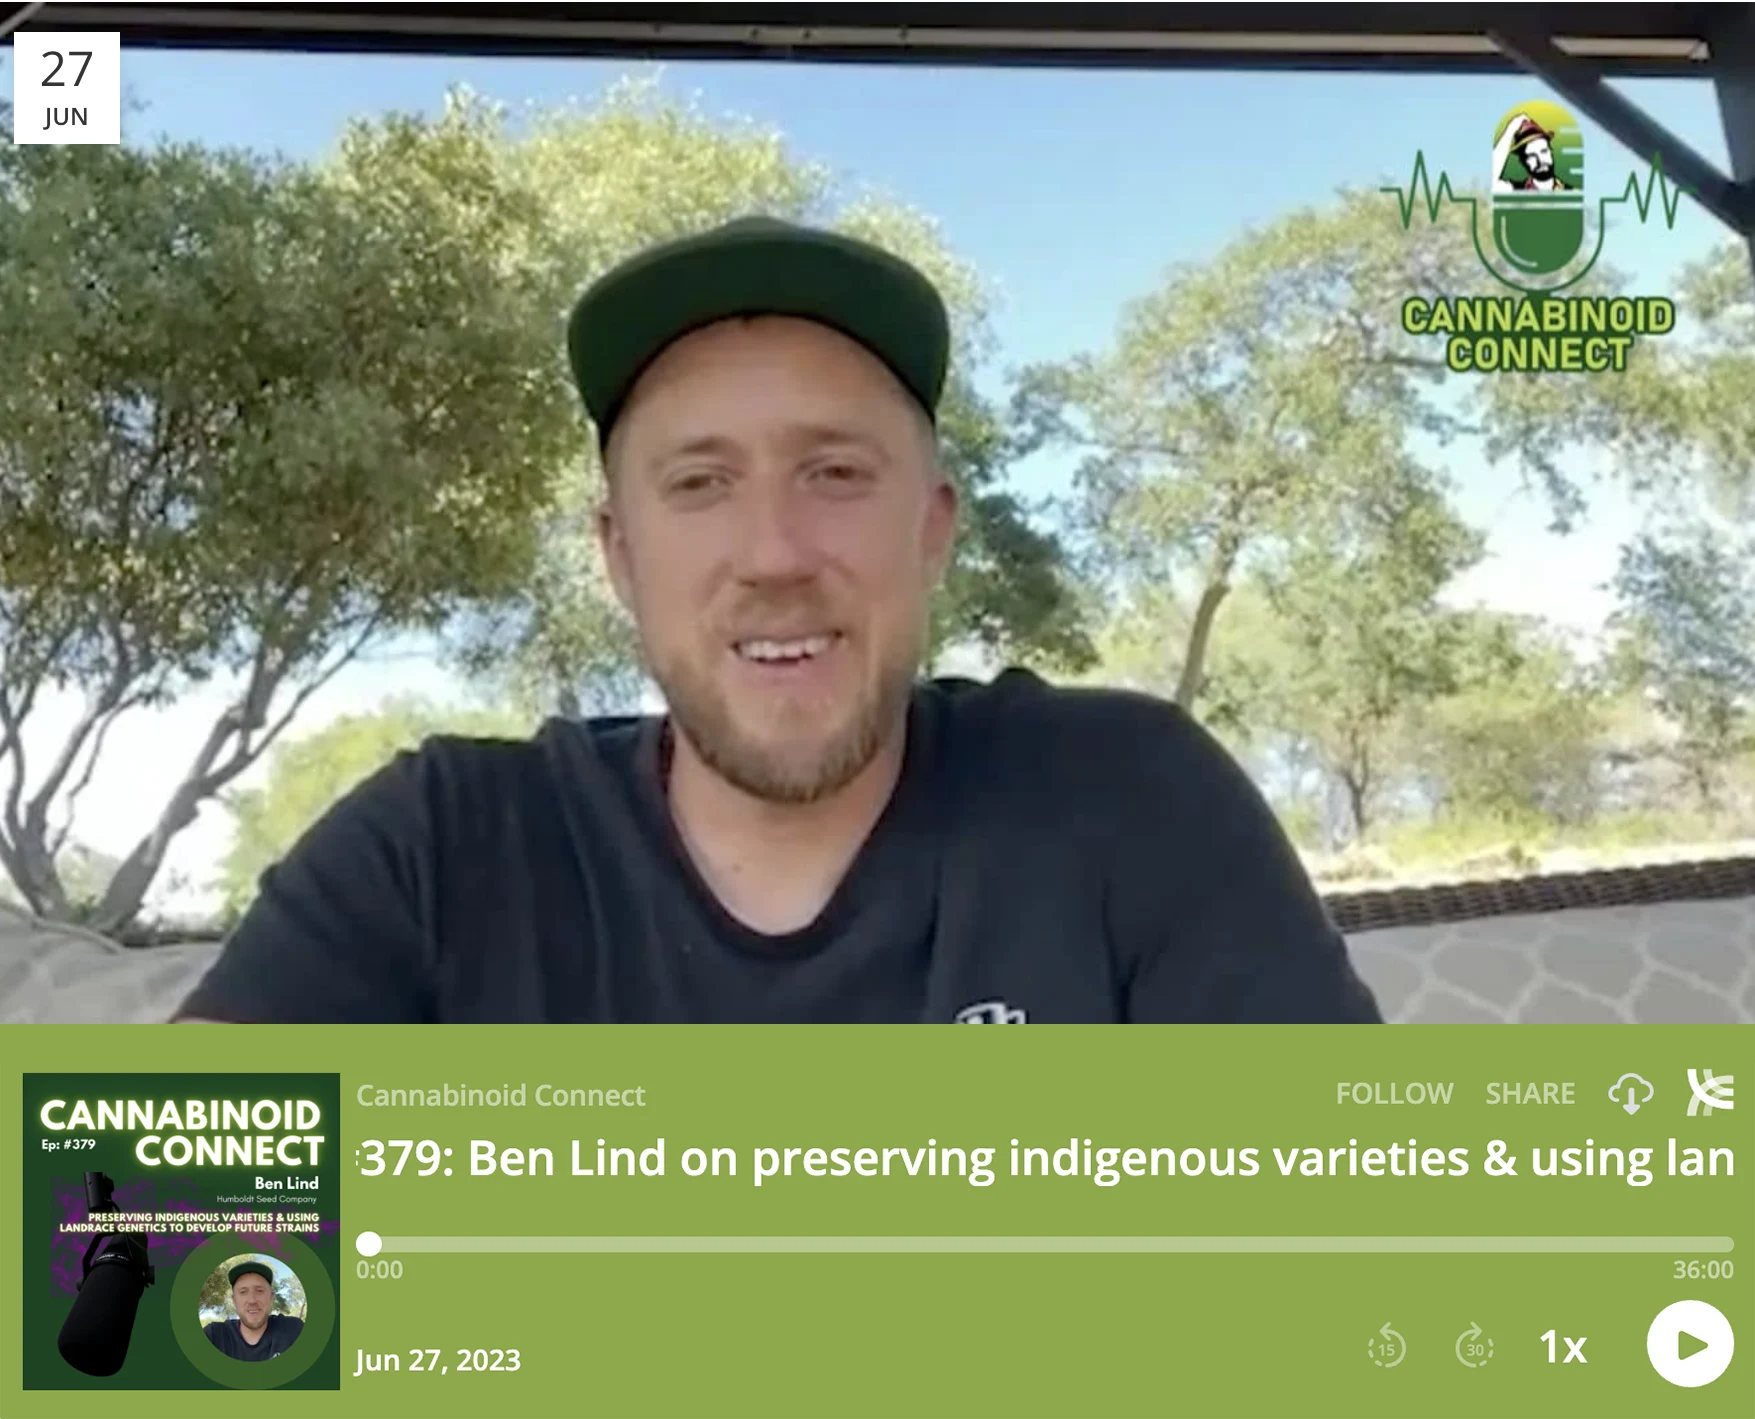 Ben Lind on preserving indigenous varieties & using landrace genetics to develop future strains